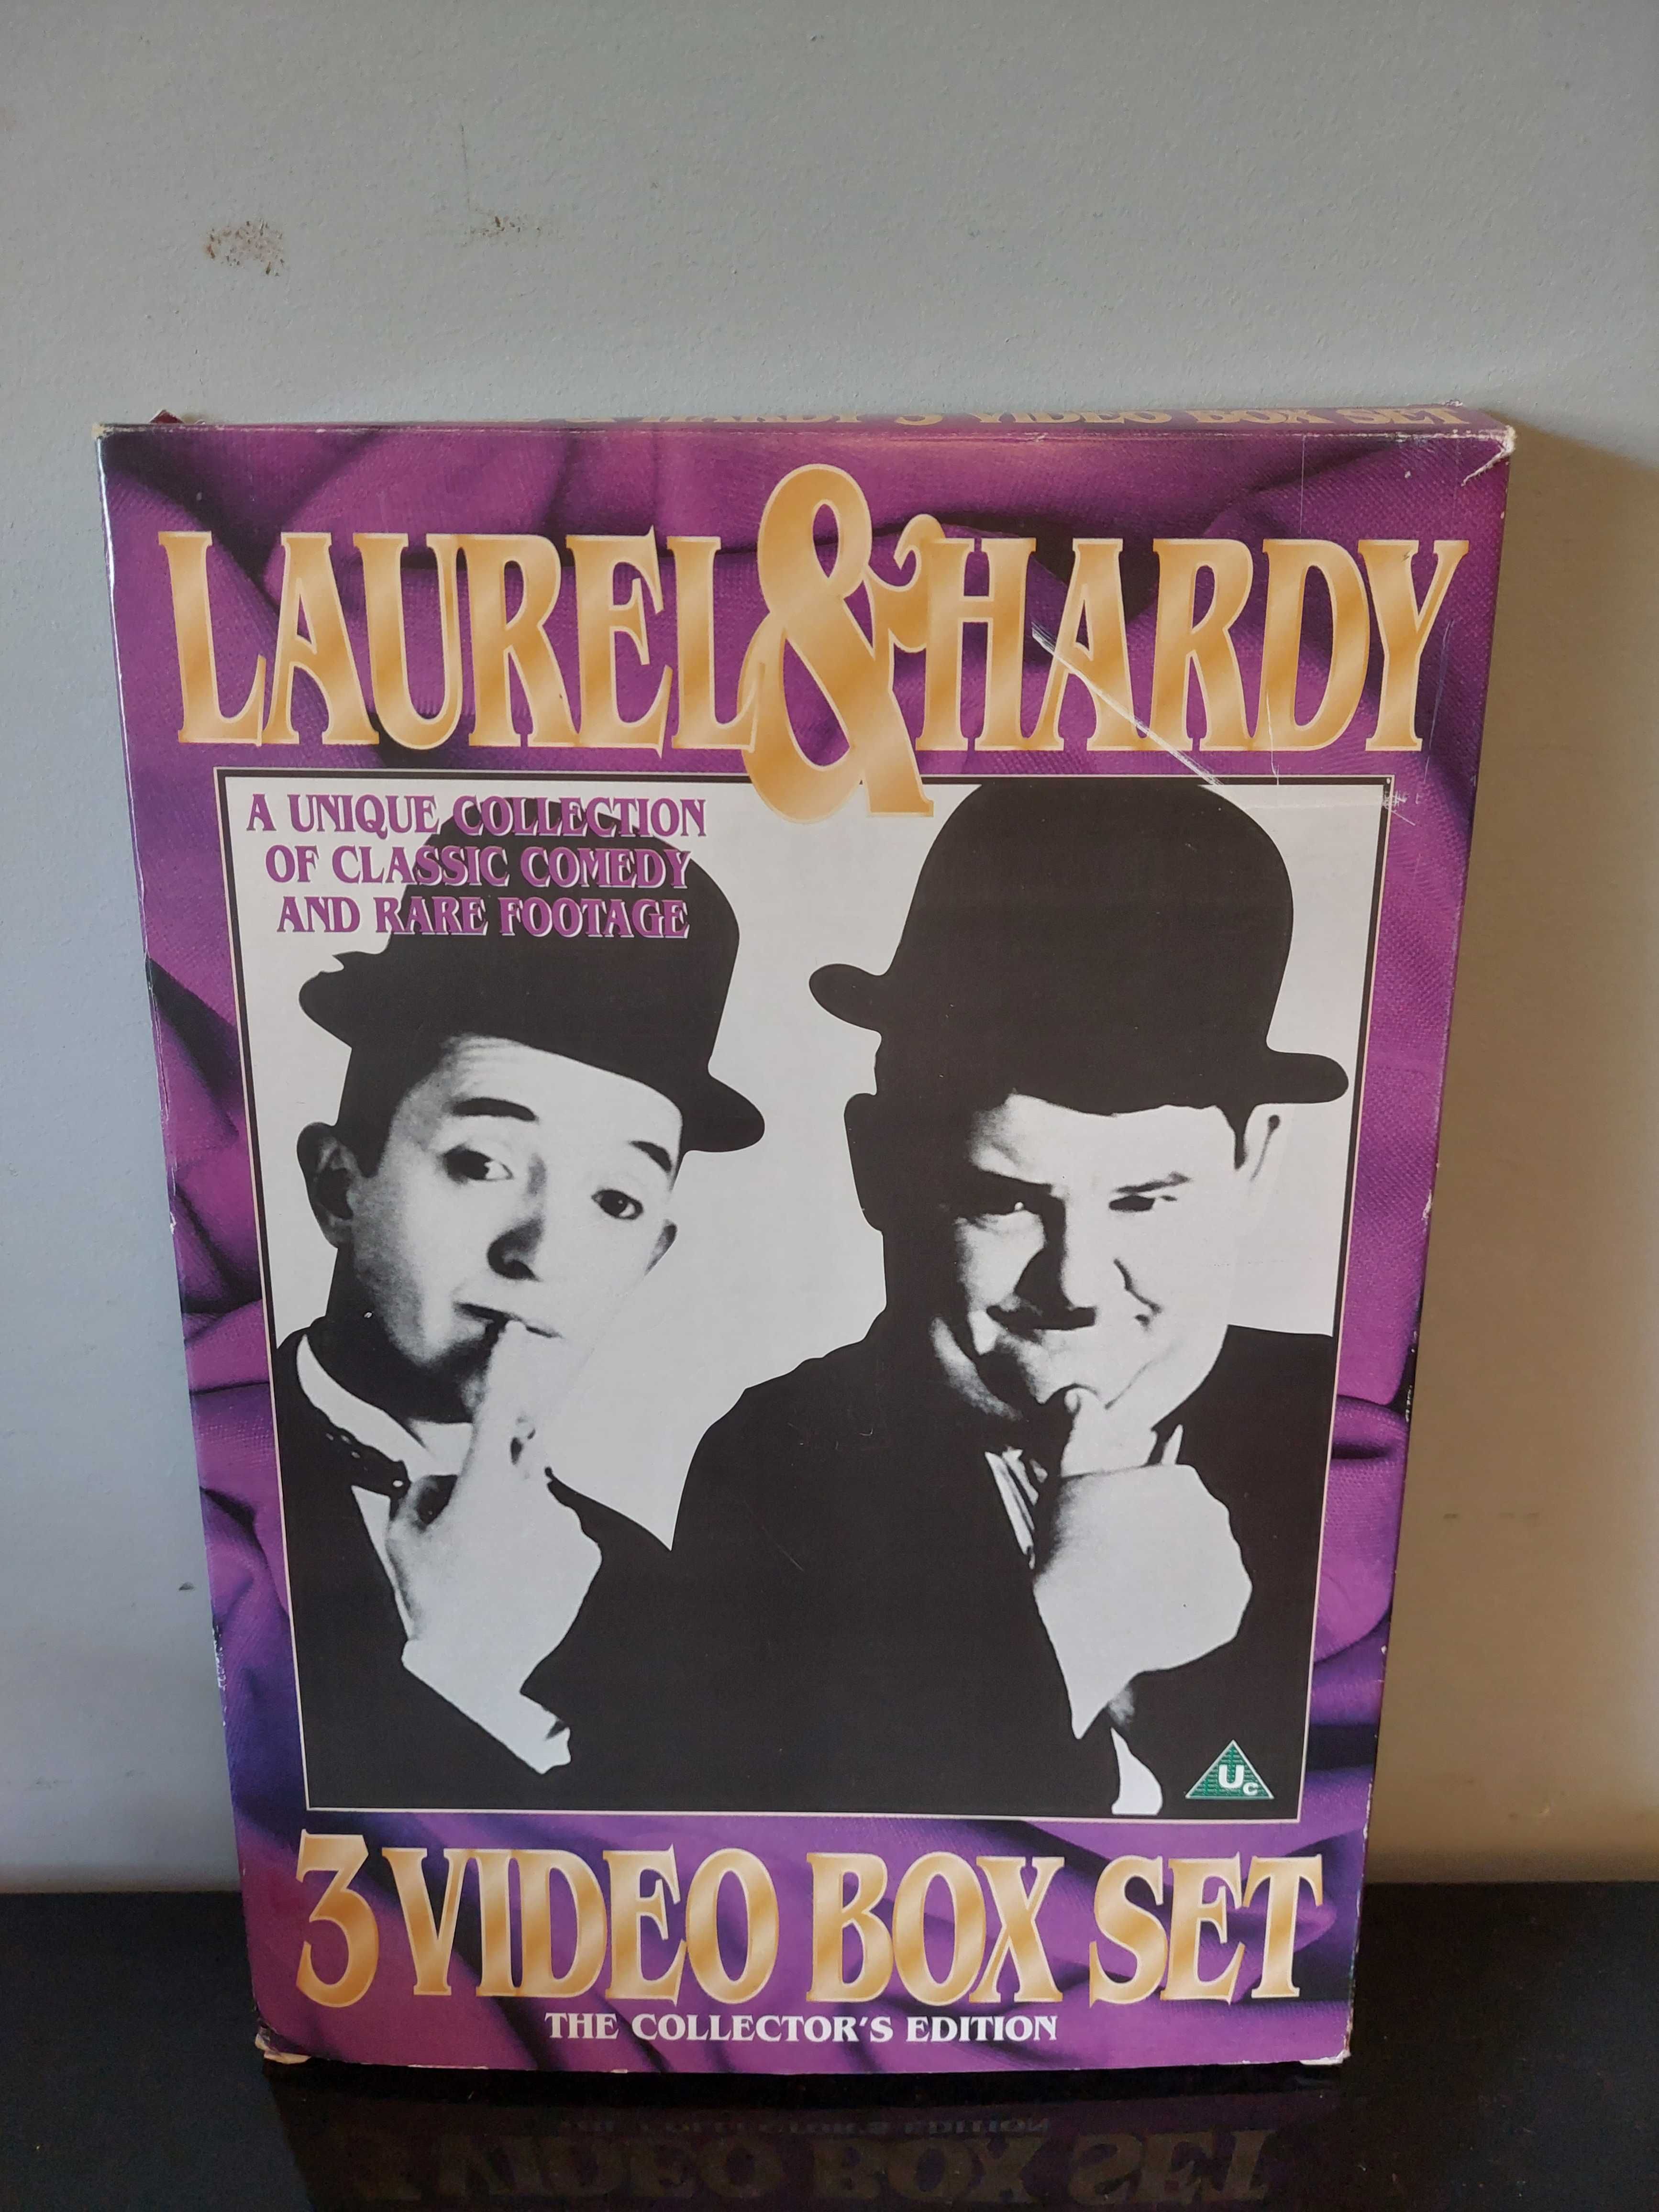 3x kaseta VHS Laurel Hardy Flip Flap Flying Deuces This Is Your Life